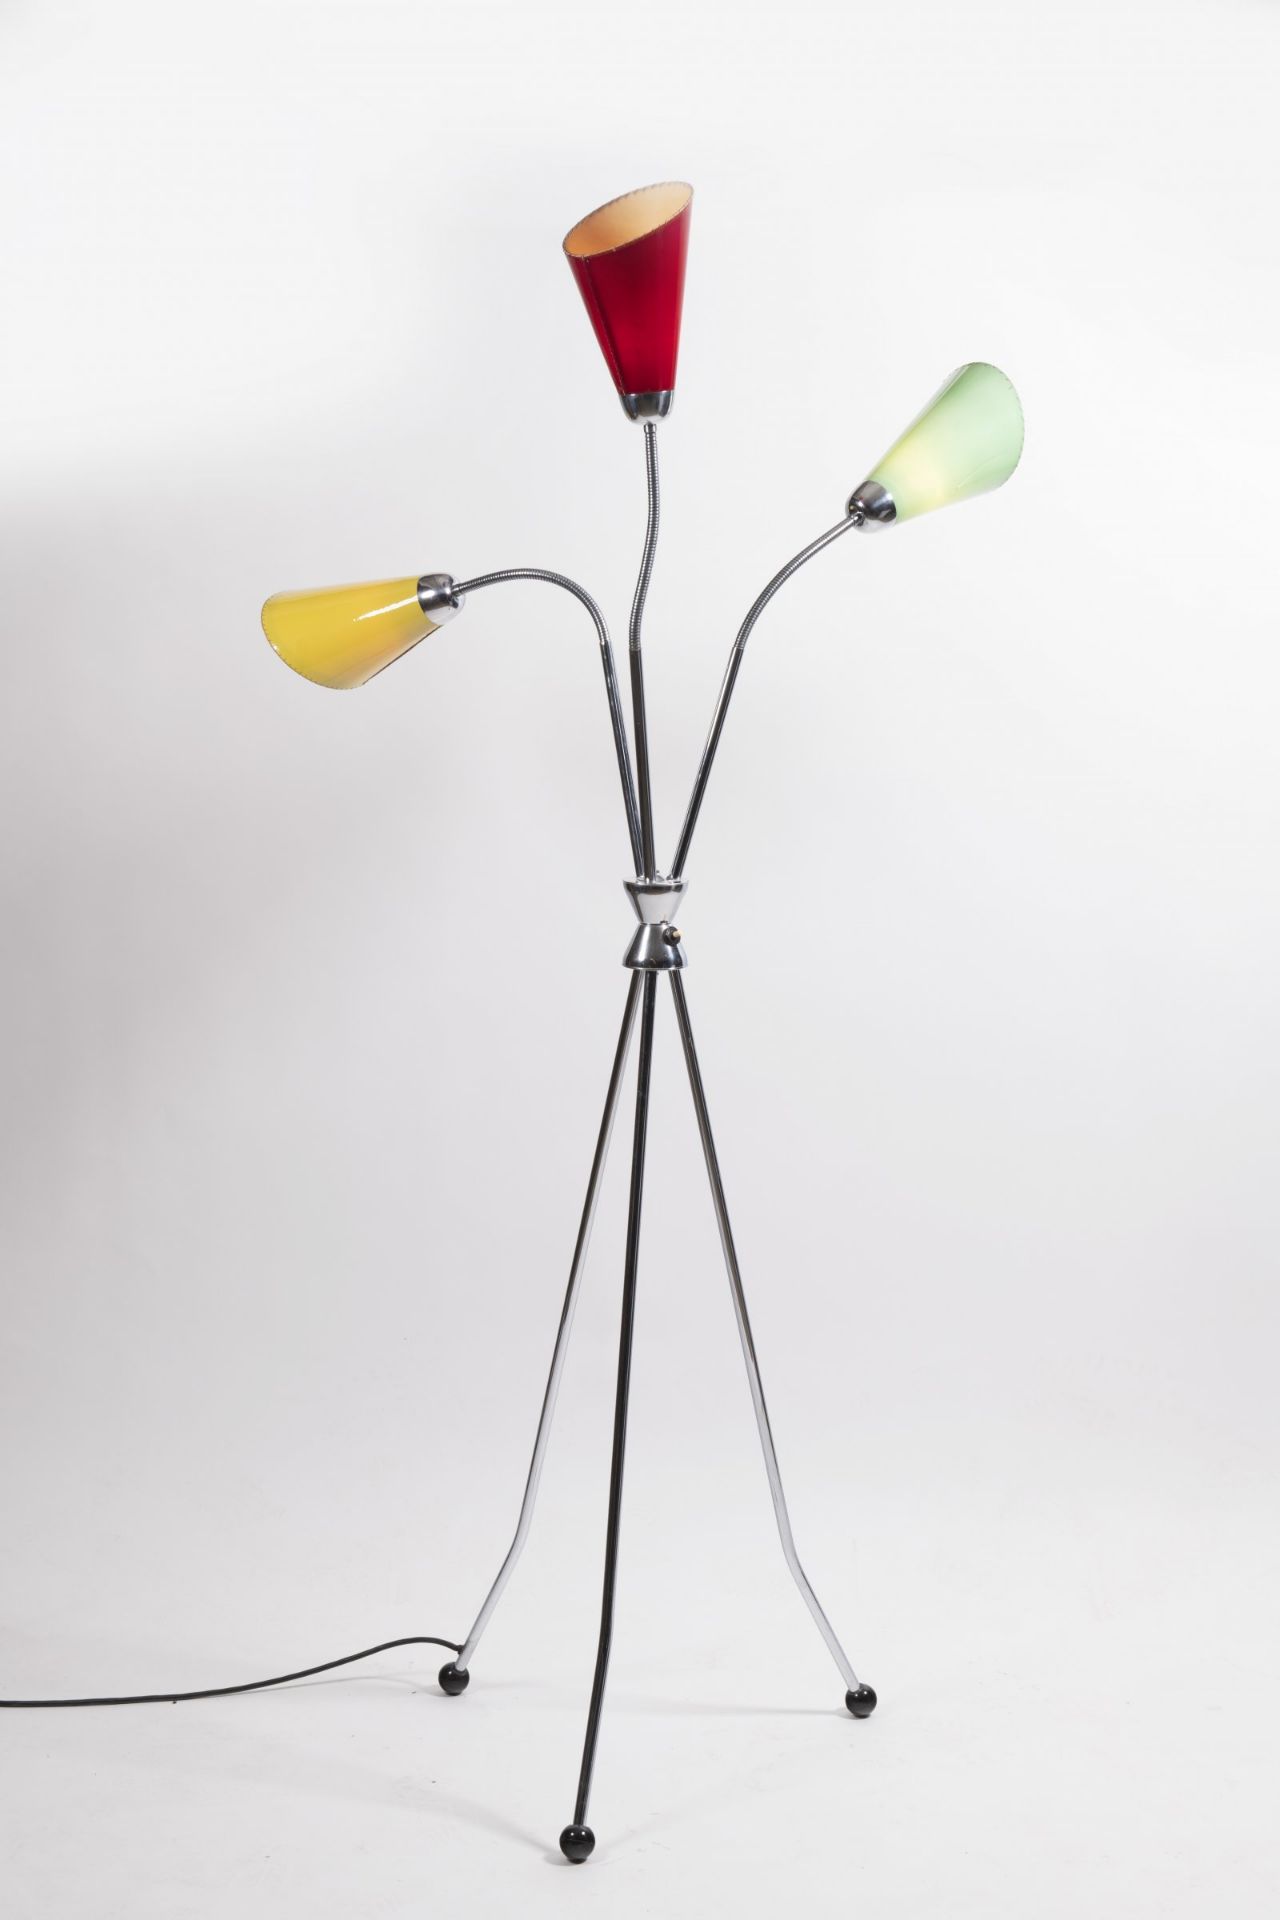 STANDING LAMP "BRUSSELS" 1960s Bohemia chrome steel, plastic 180 x 100 cm The three-arm floor lamp